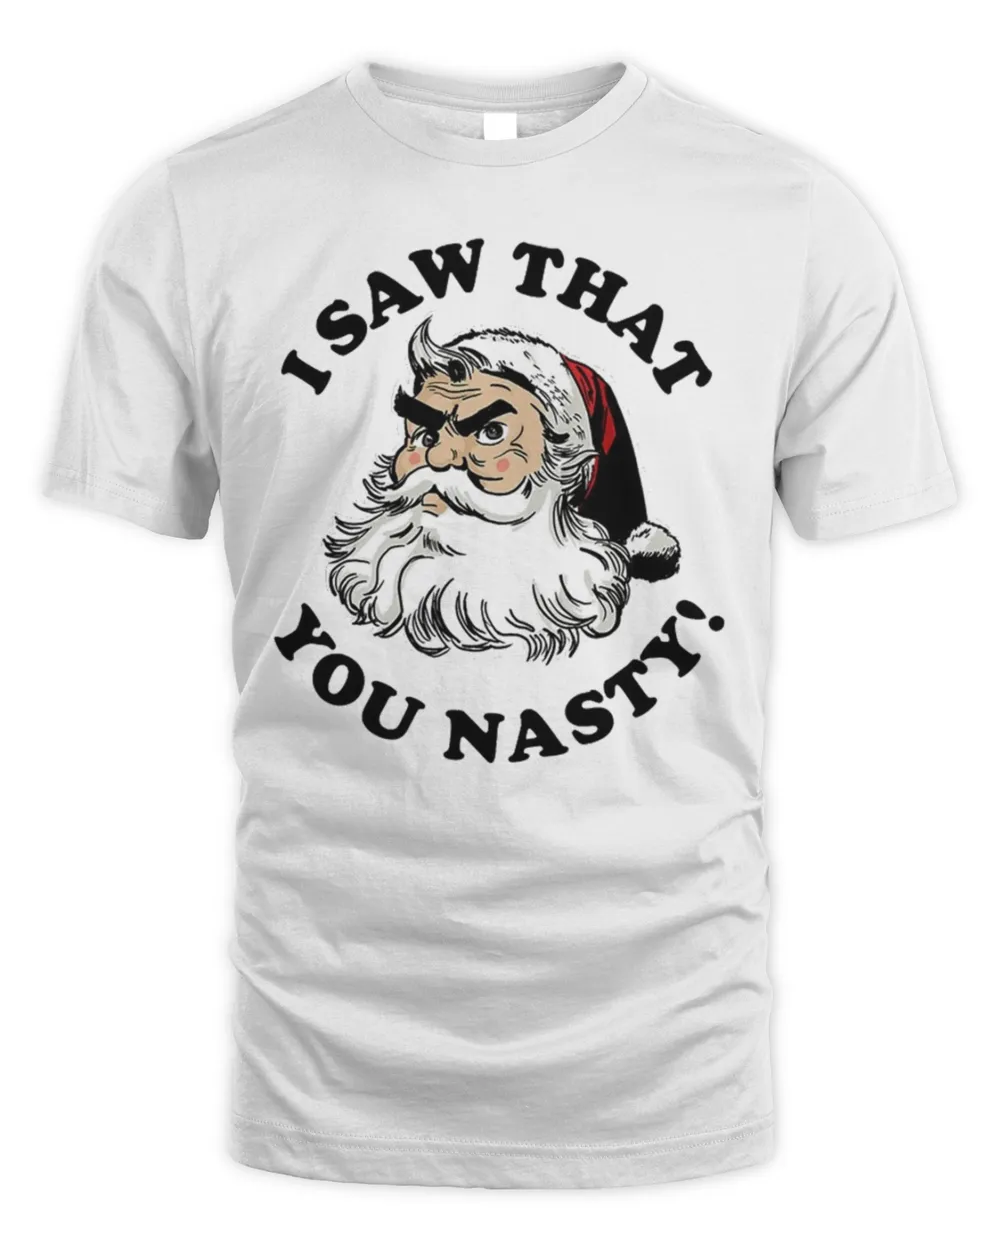 Santa I Saw That You Nasty Santa Christmas T-Shirt